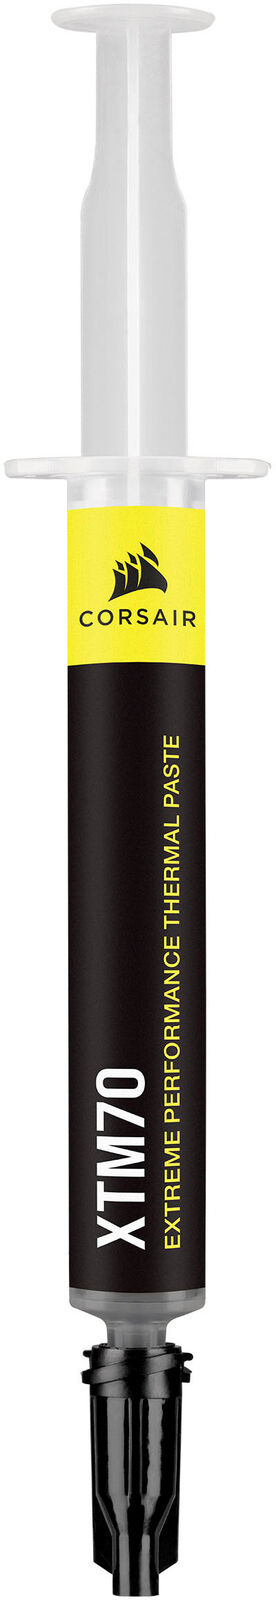 CORSAIR - XTM70 Extreme Performance Thermal Paste